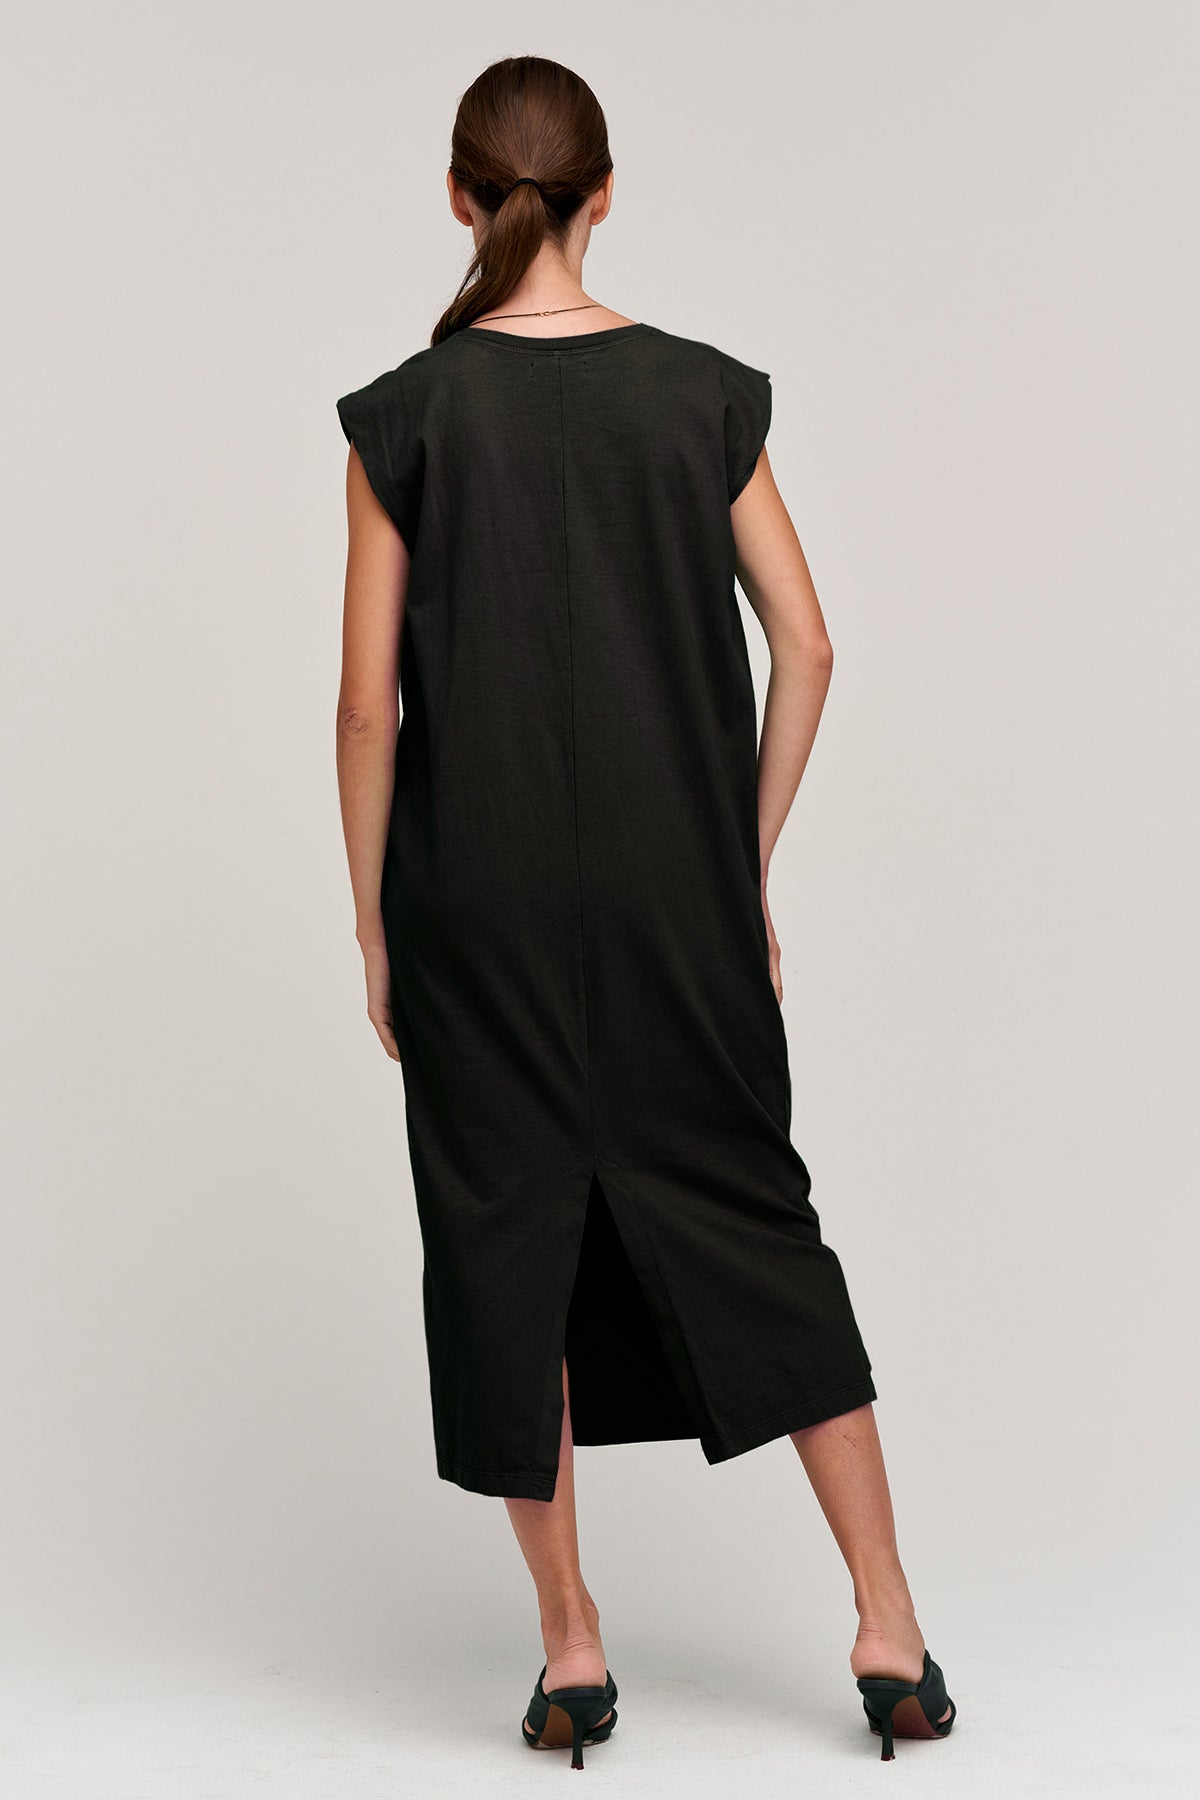 Kenny sleeveless dress in black back-25025664516289